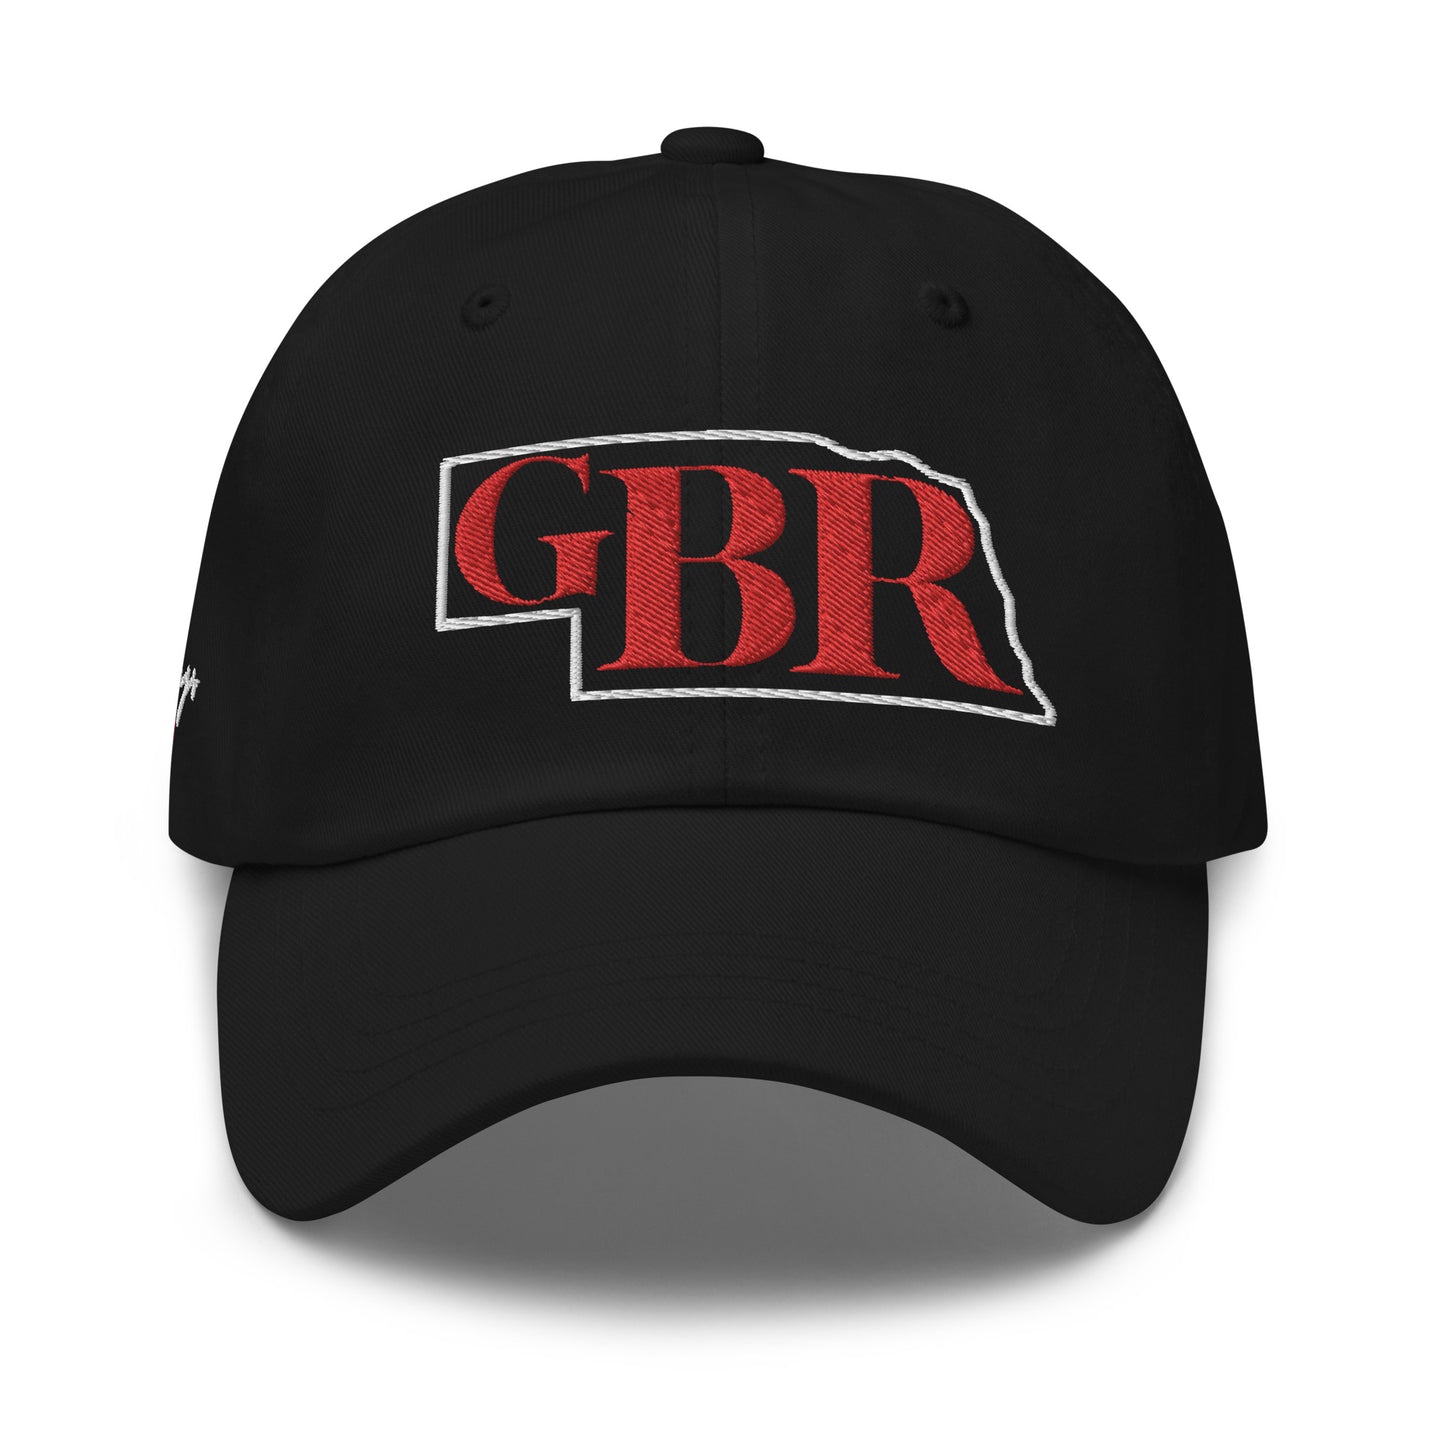 GBR Dad hat